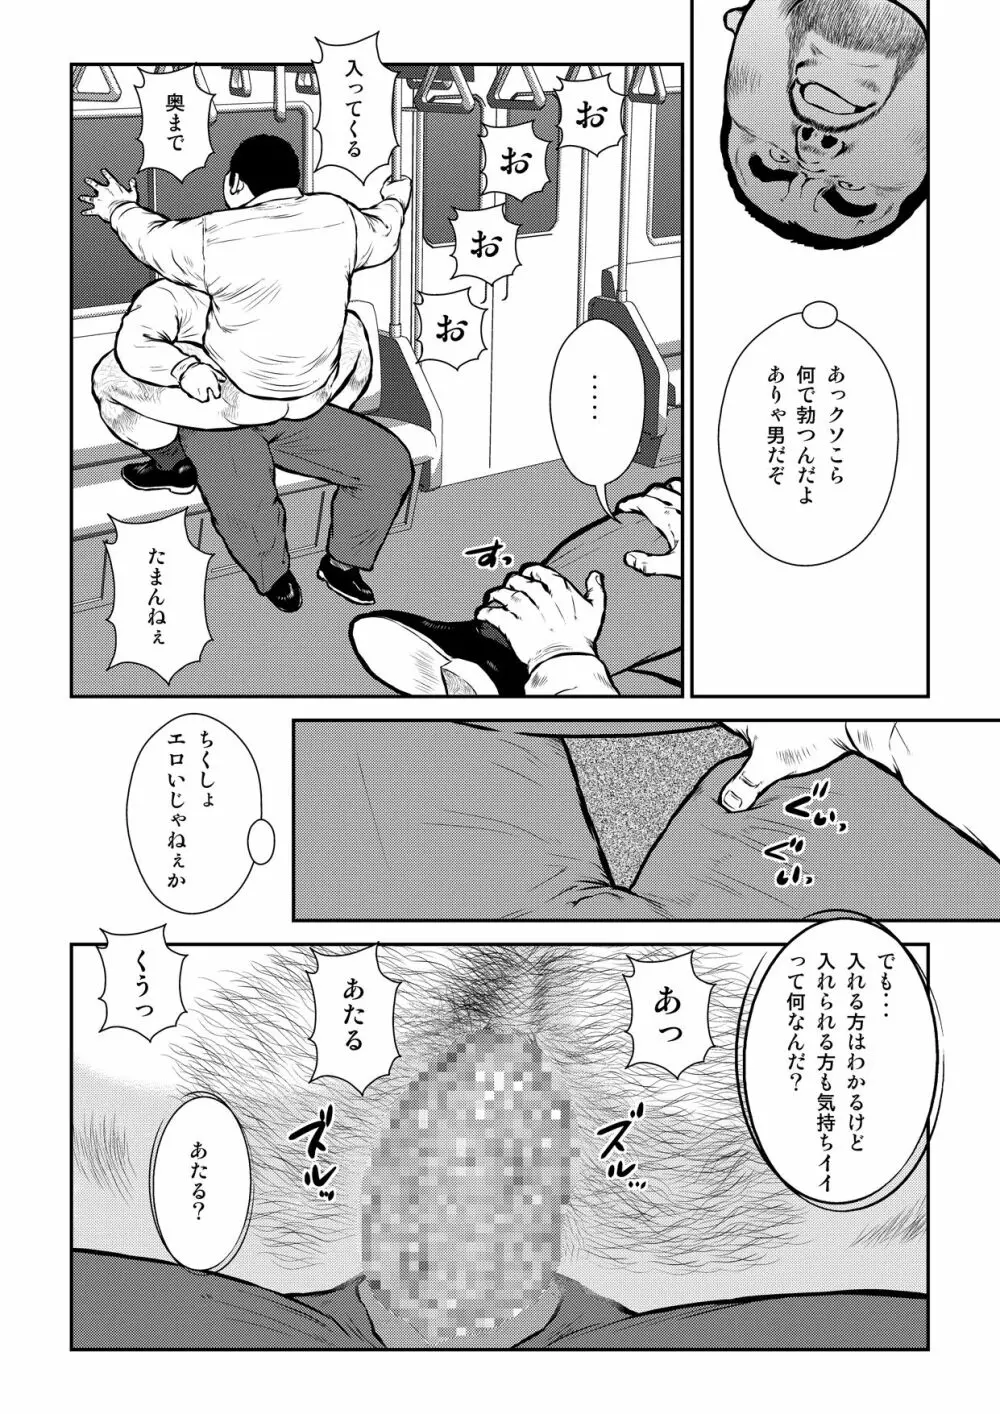 穴場2〜地下鉄〜 8ページ